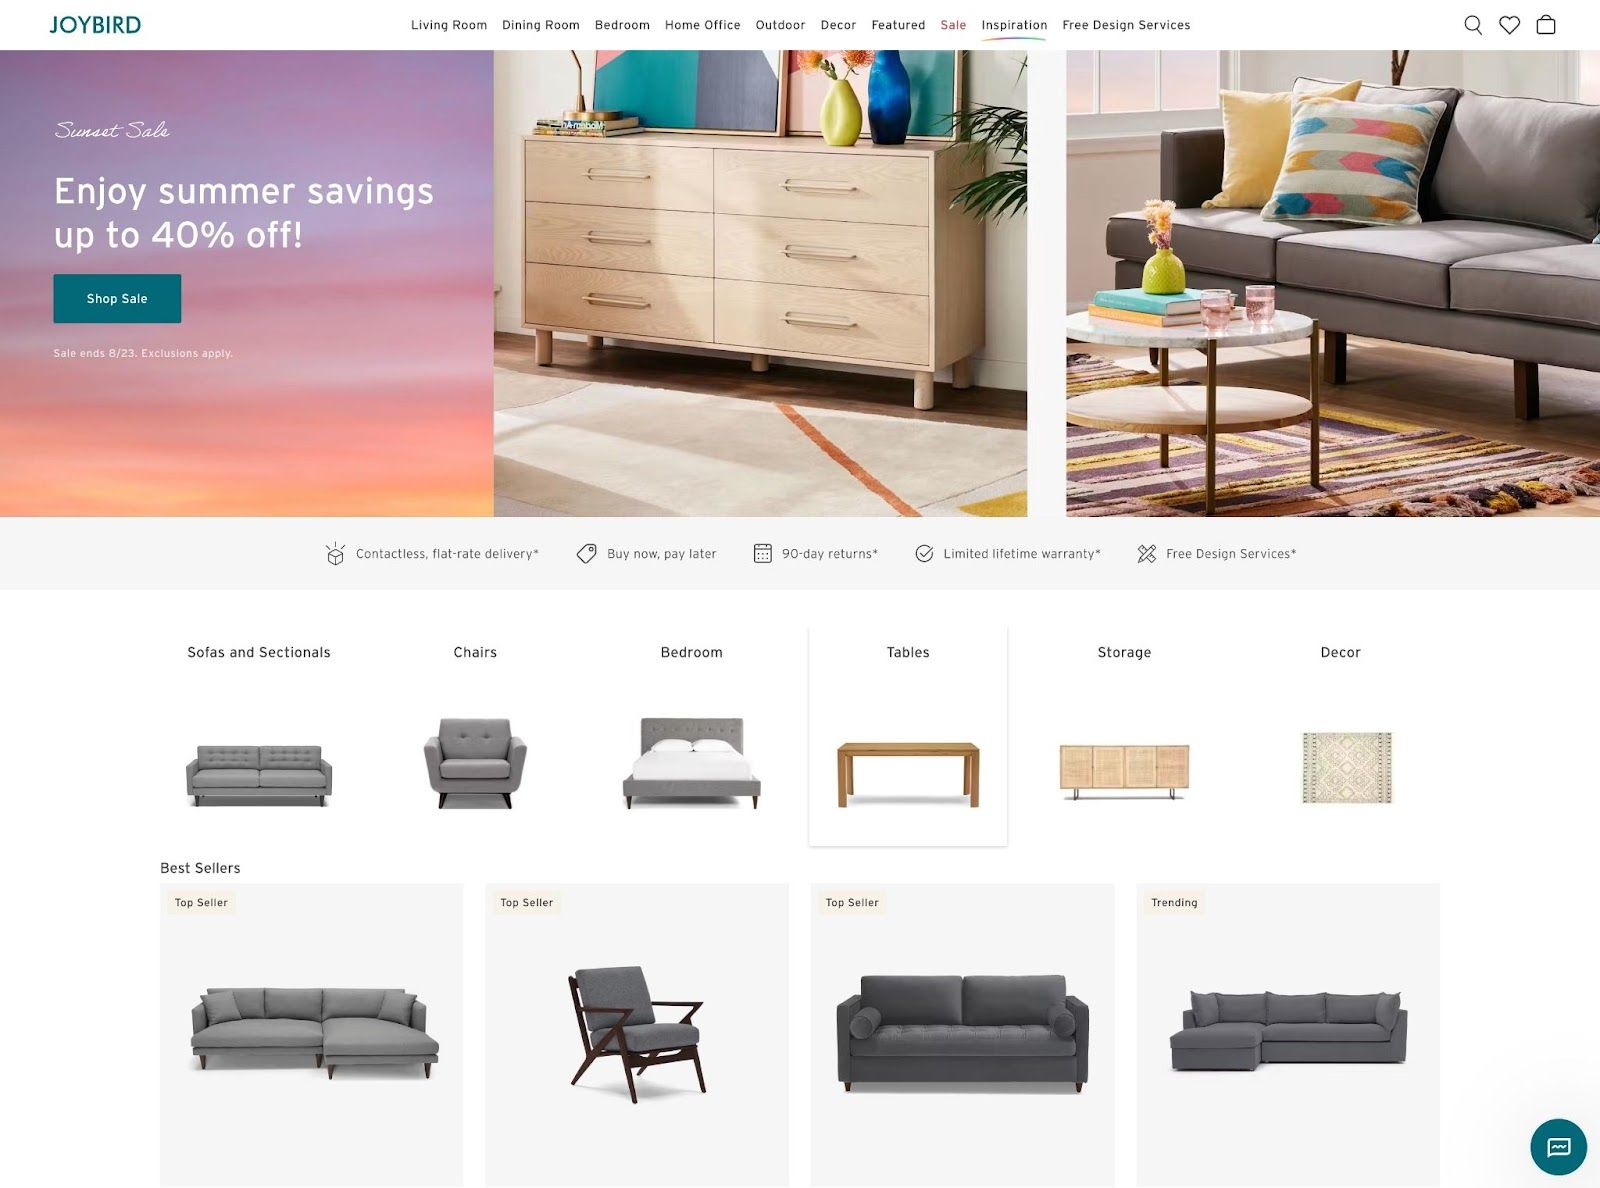 TomboyX  eCommerce Website Design Gallery & Tech Inspiration